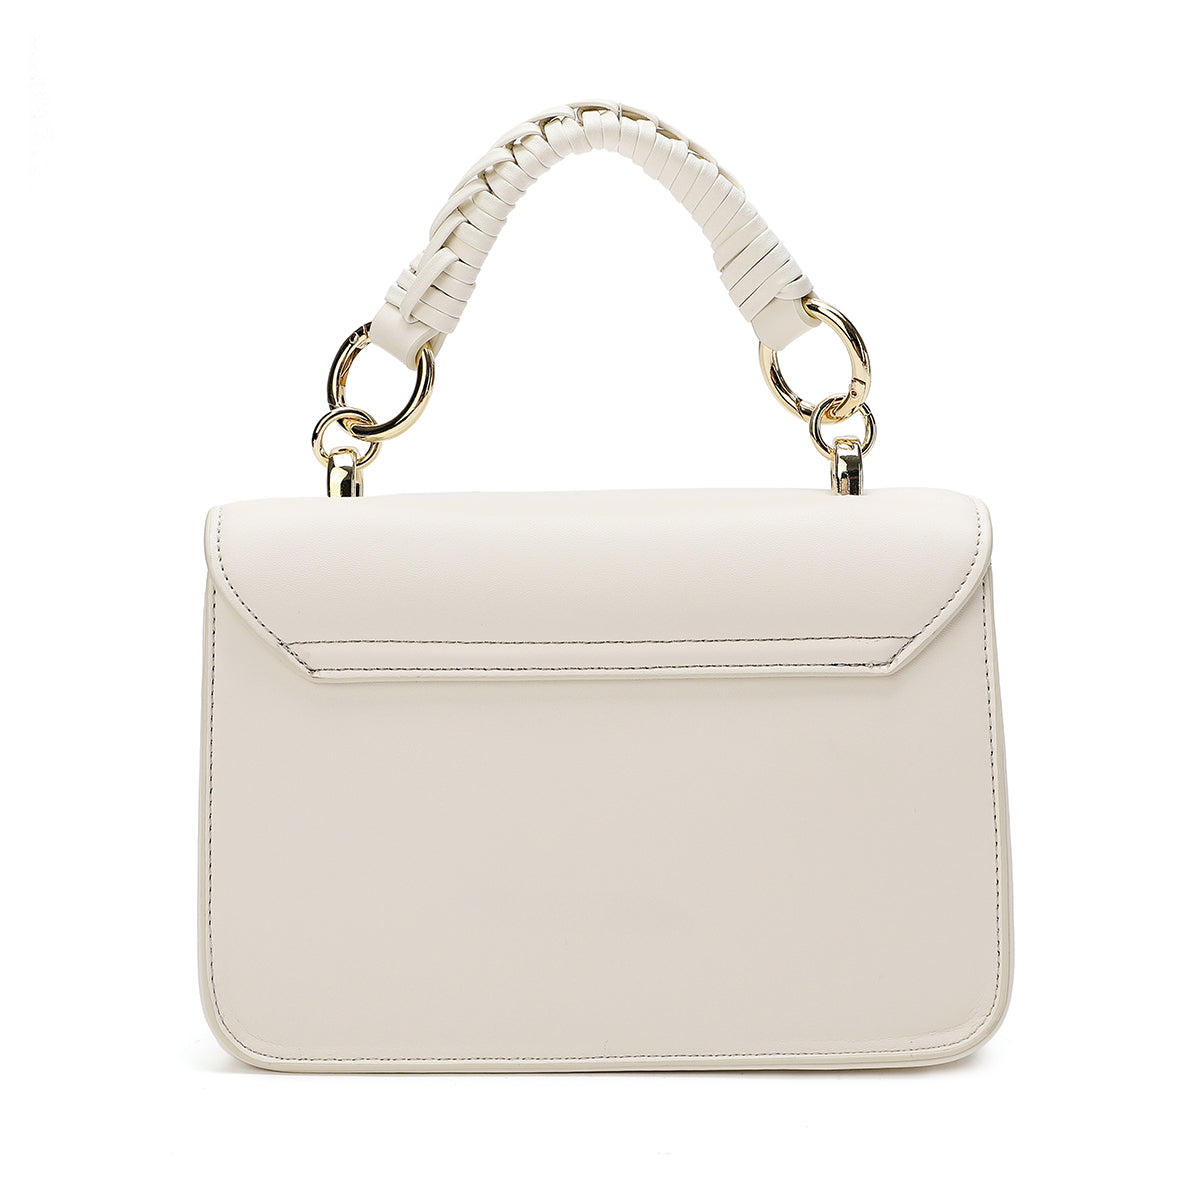 Plain light handbag in several colors